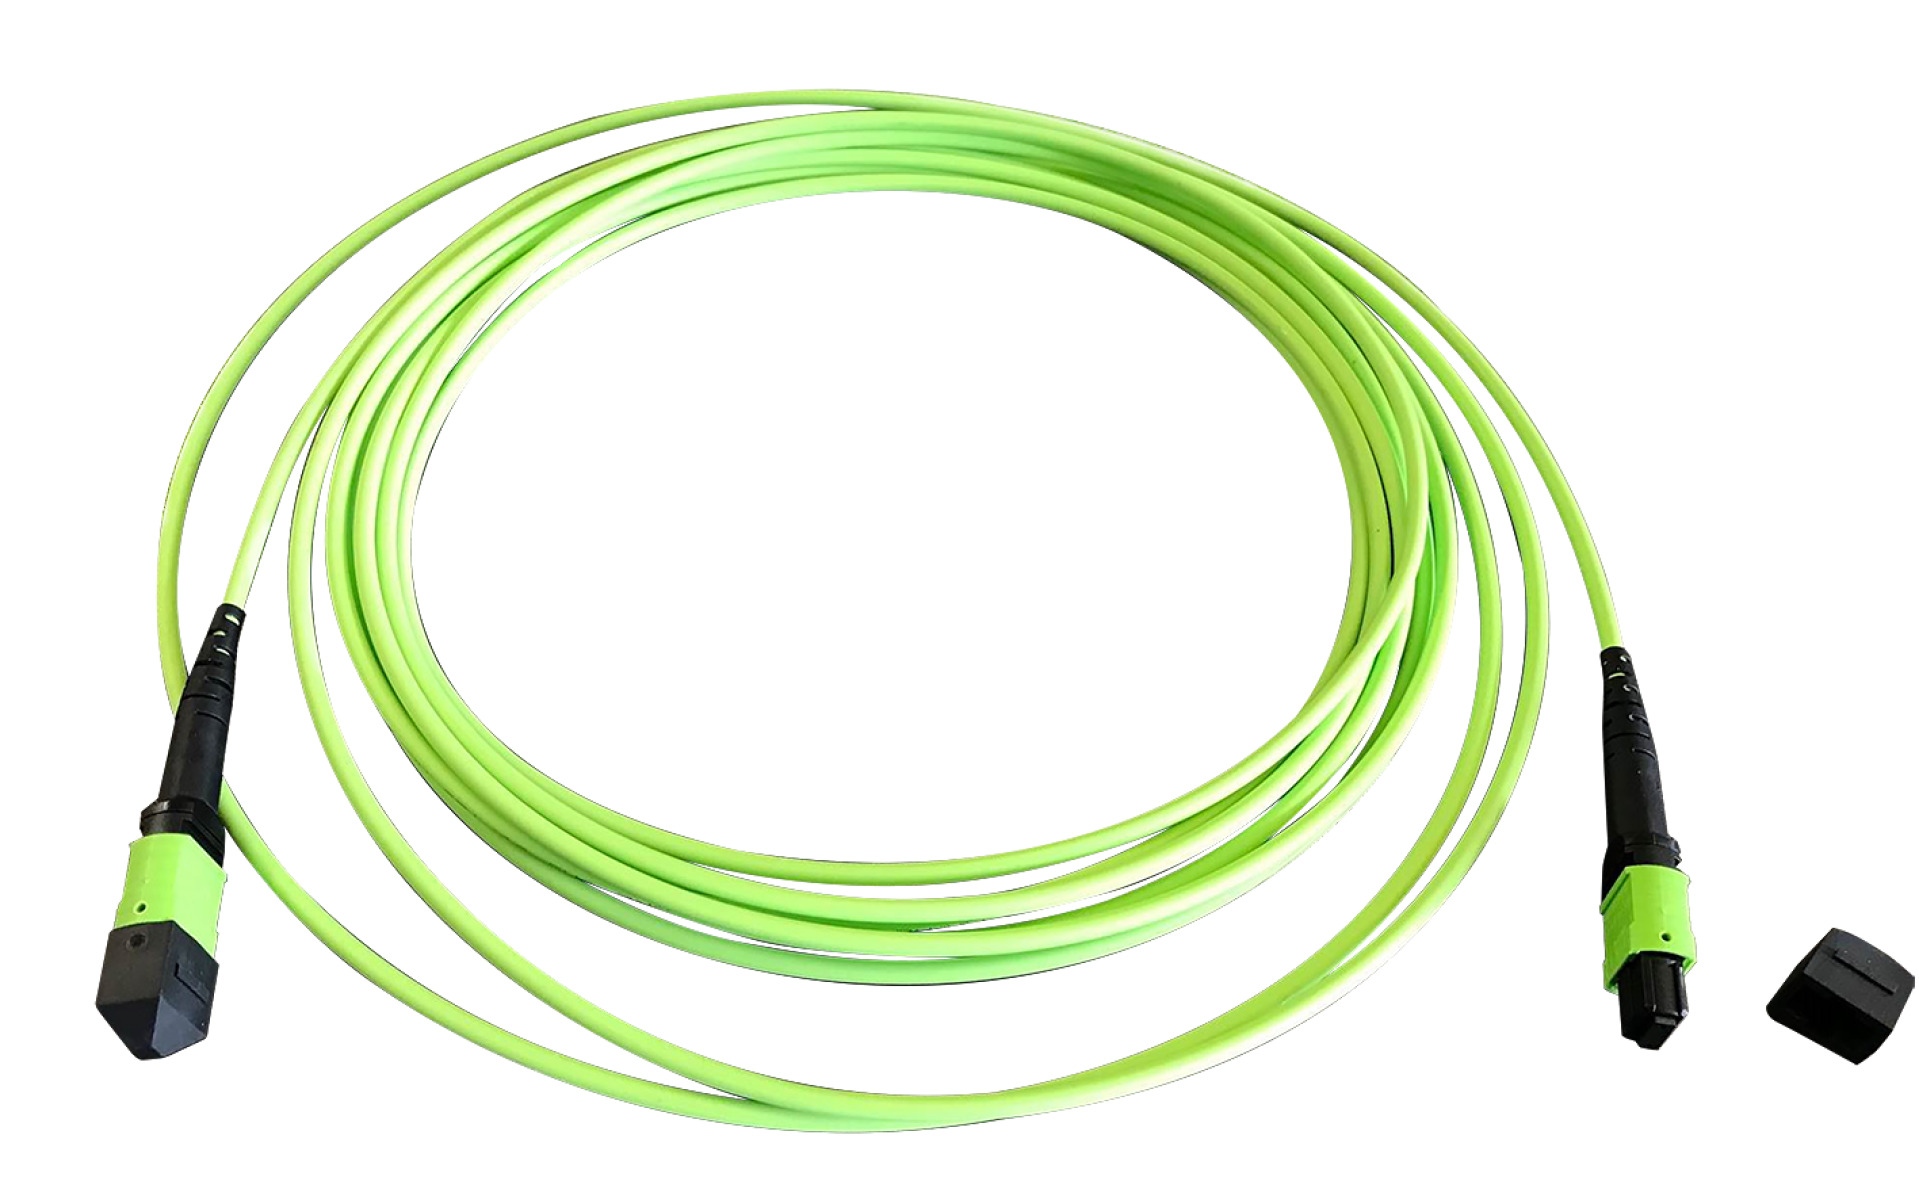 MTP®-F/MTP®-F 12-fiber matrix patch cable OM5, LSZH lime green, Code B, 2m